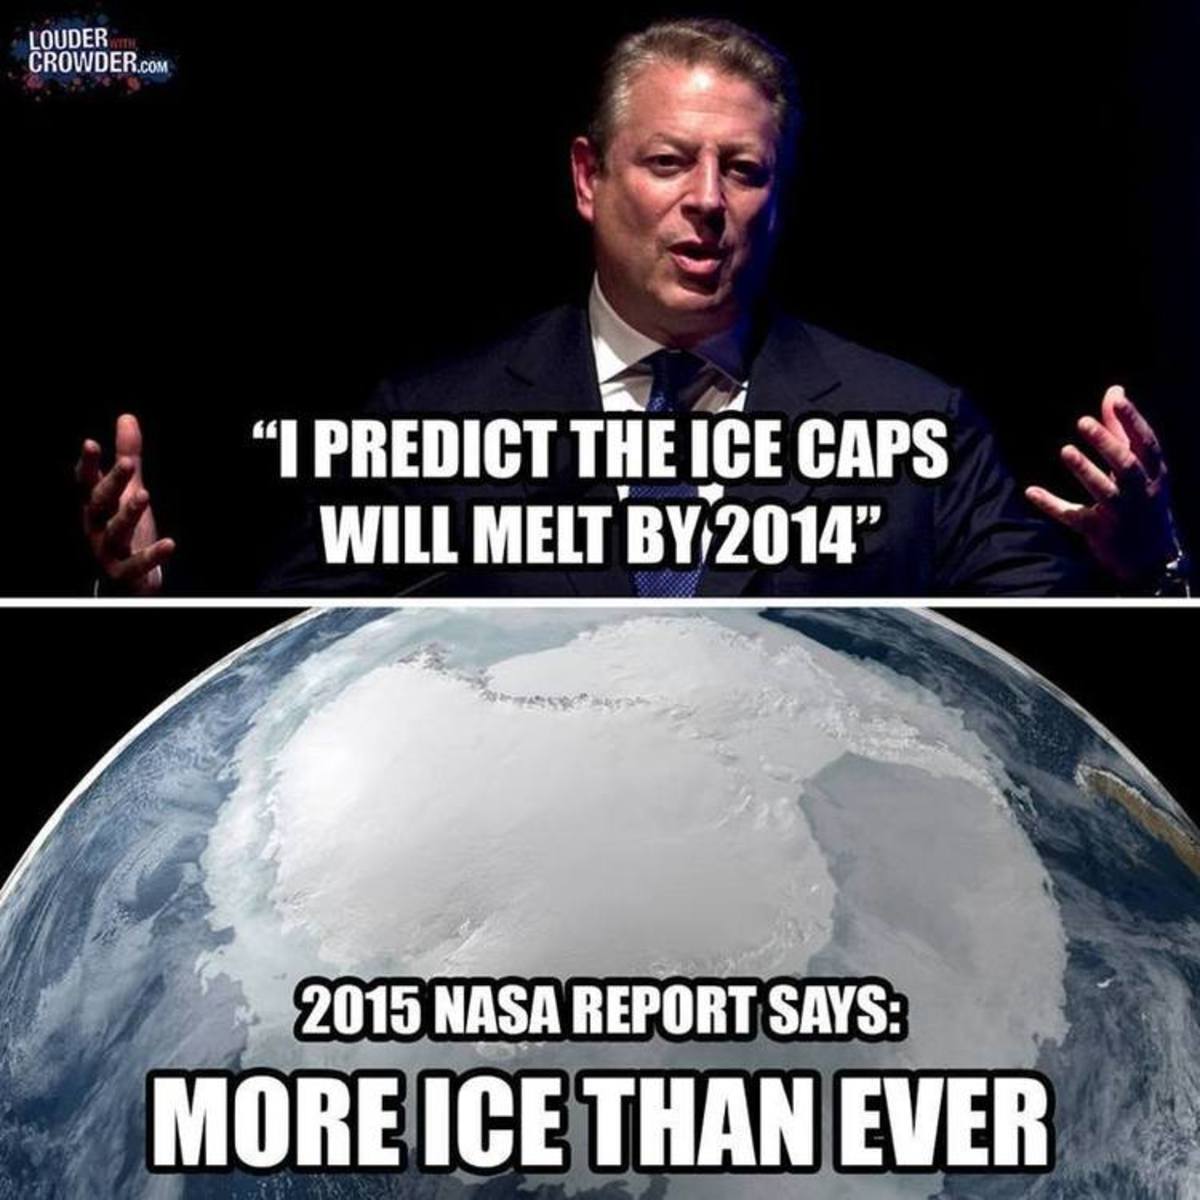 global-warming-myth-climate-change-hoax